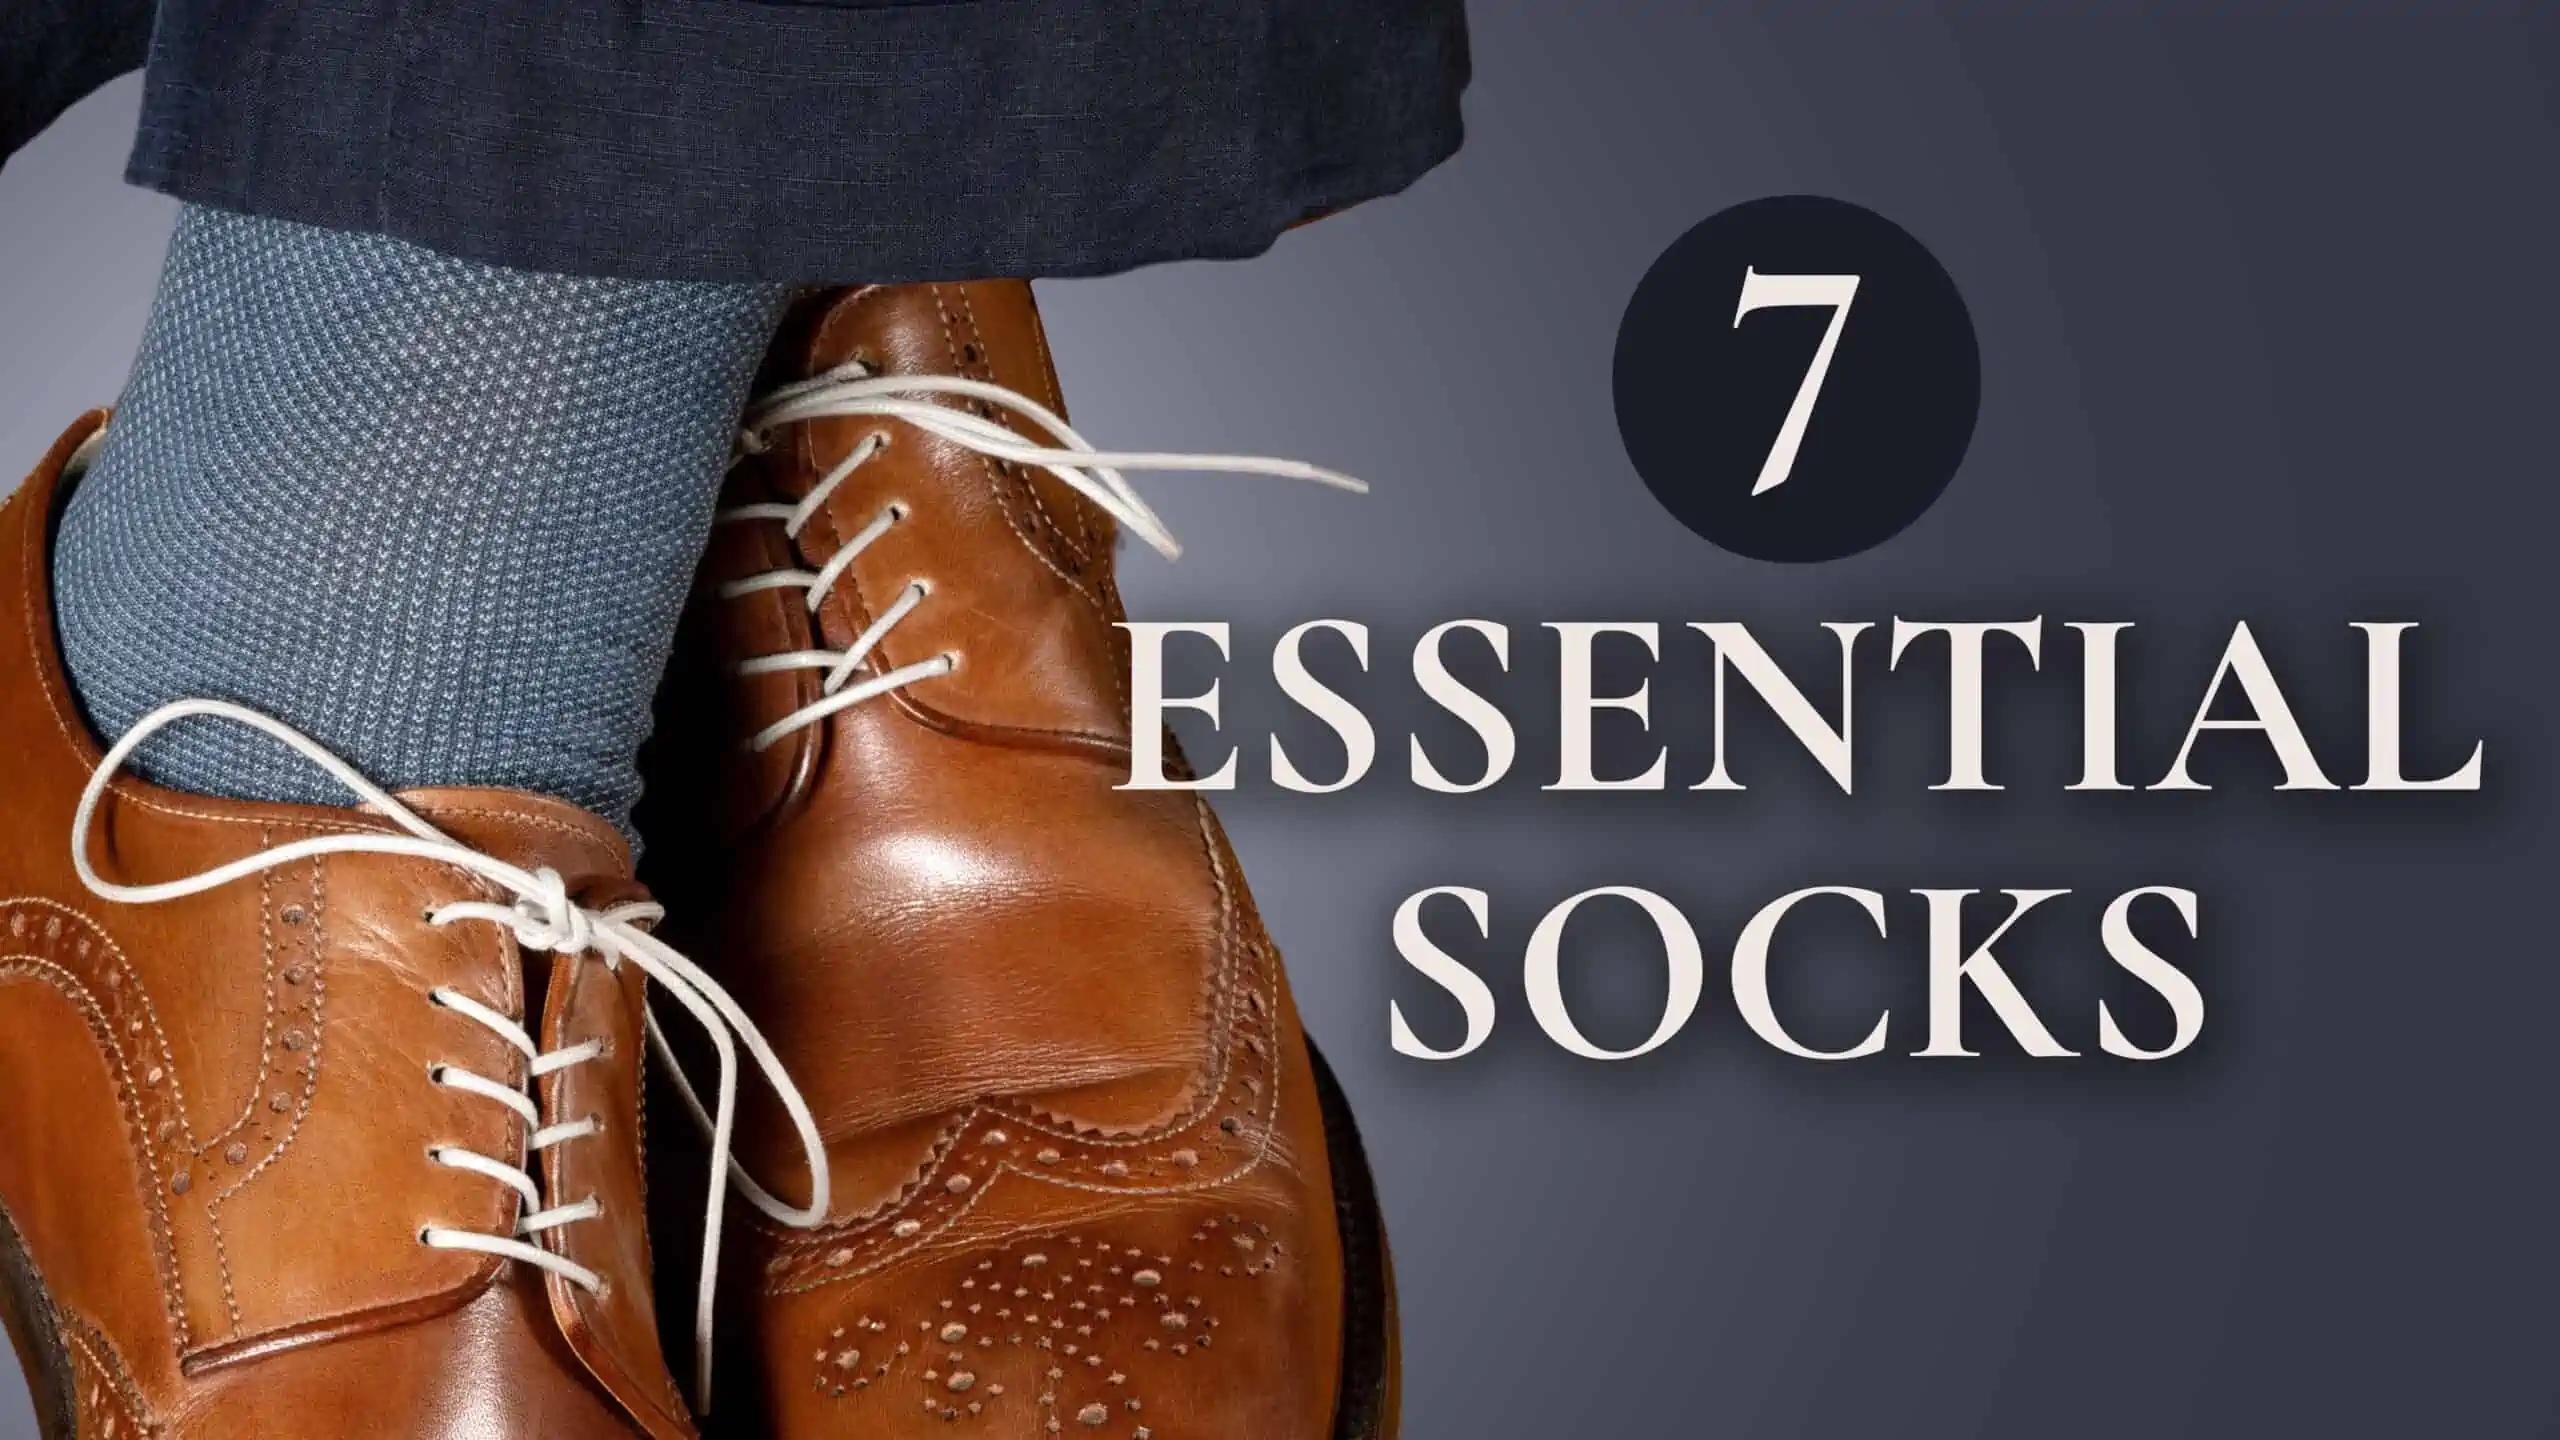 7 essential socks 3840x2160 scaled